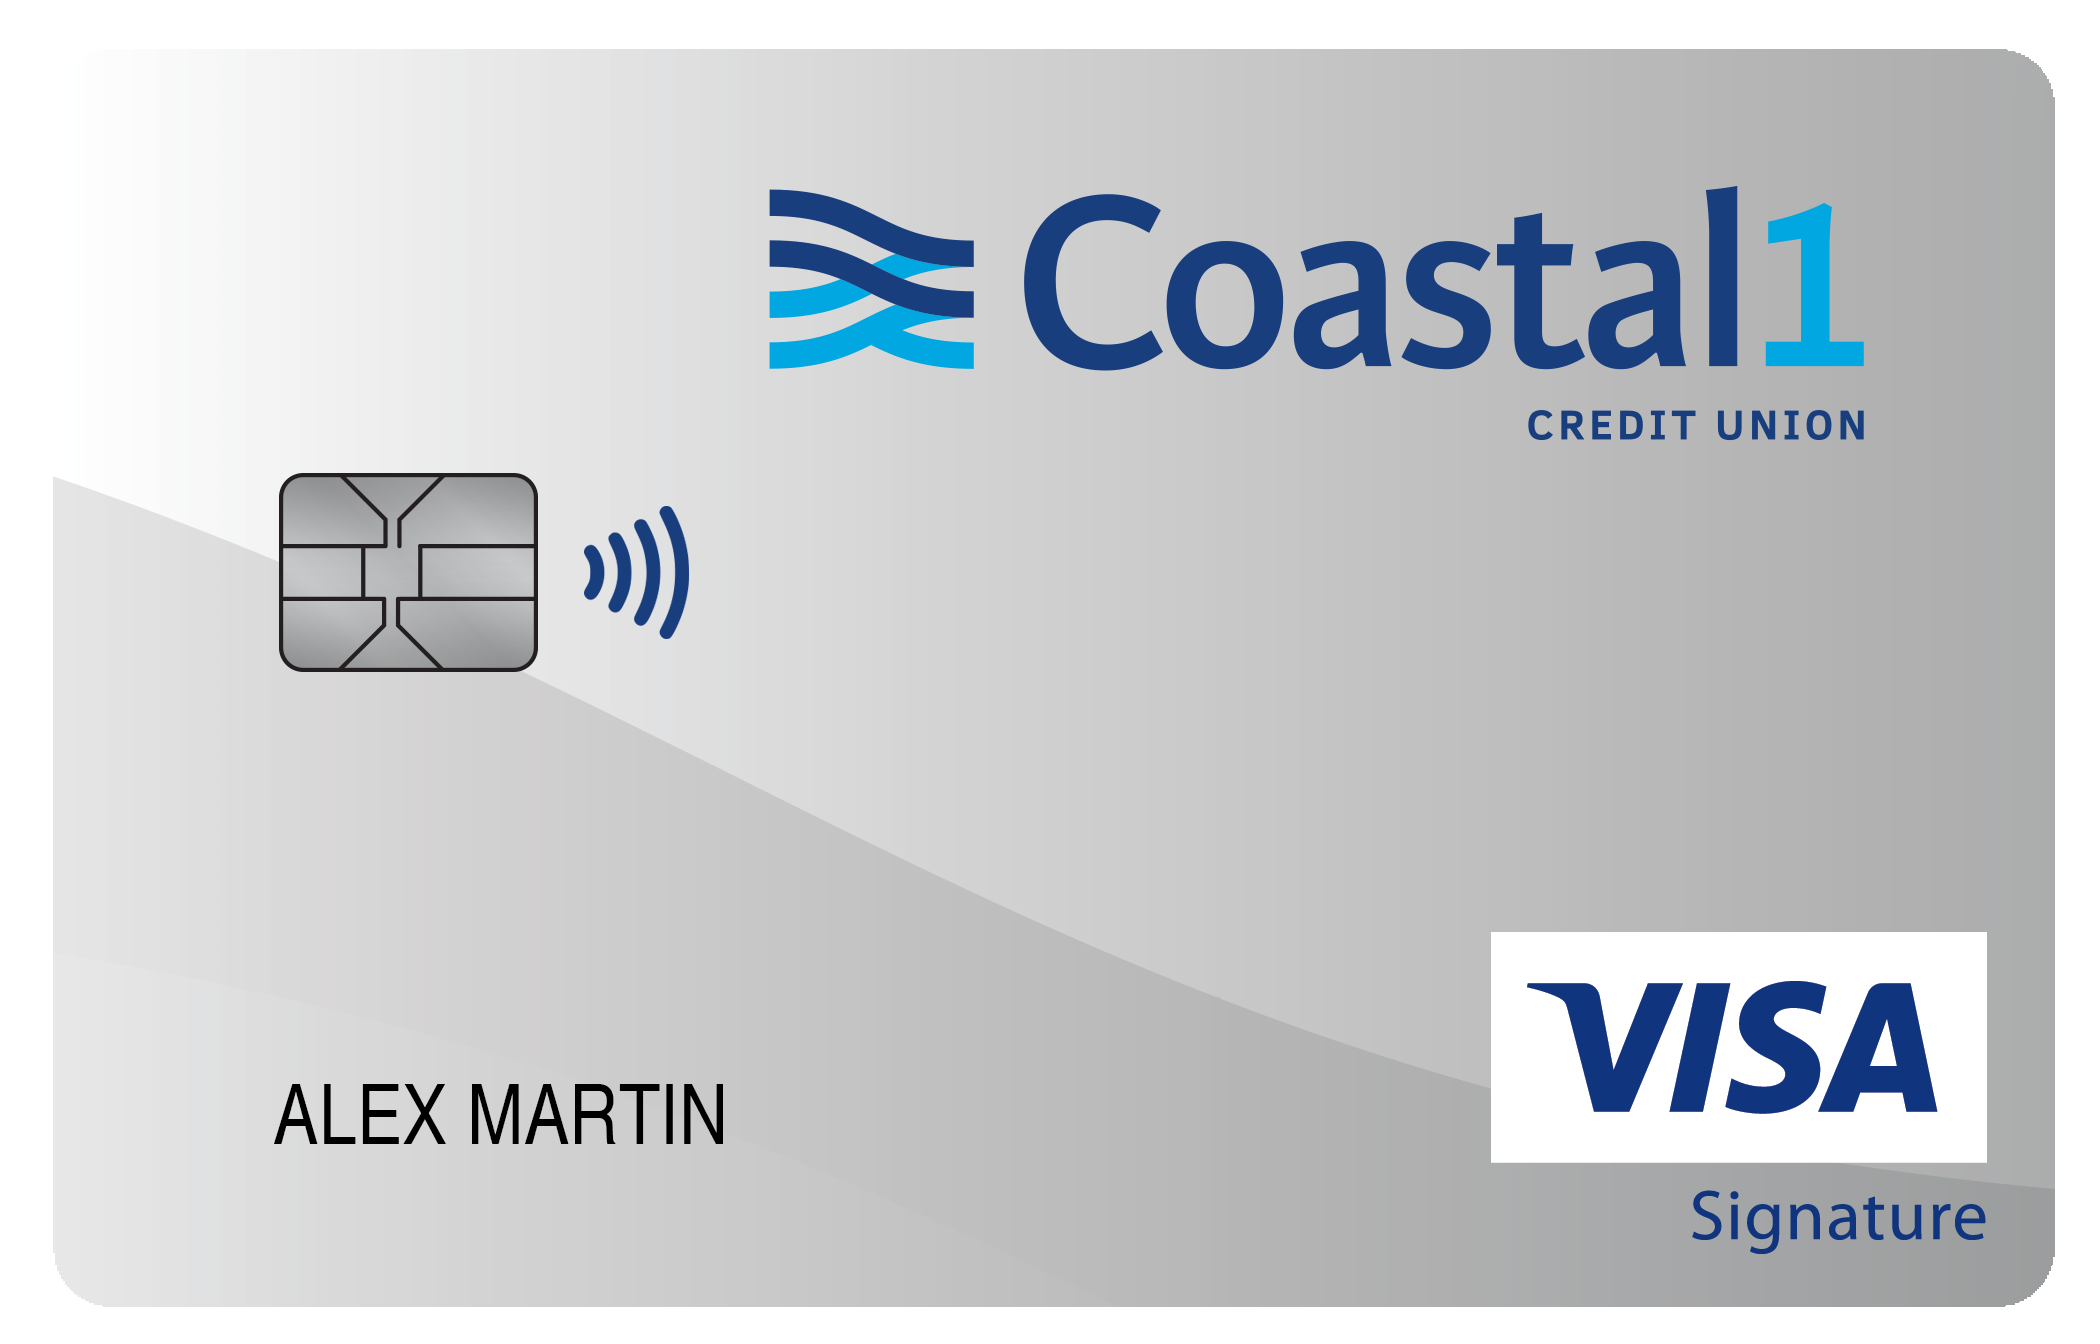 Coastal1 Credit Union Everyday Rewards+ Card